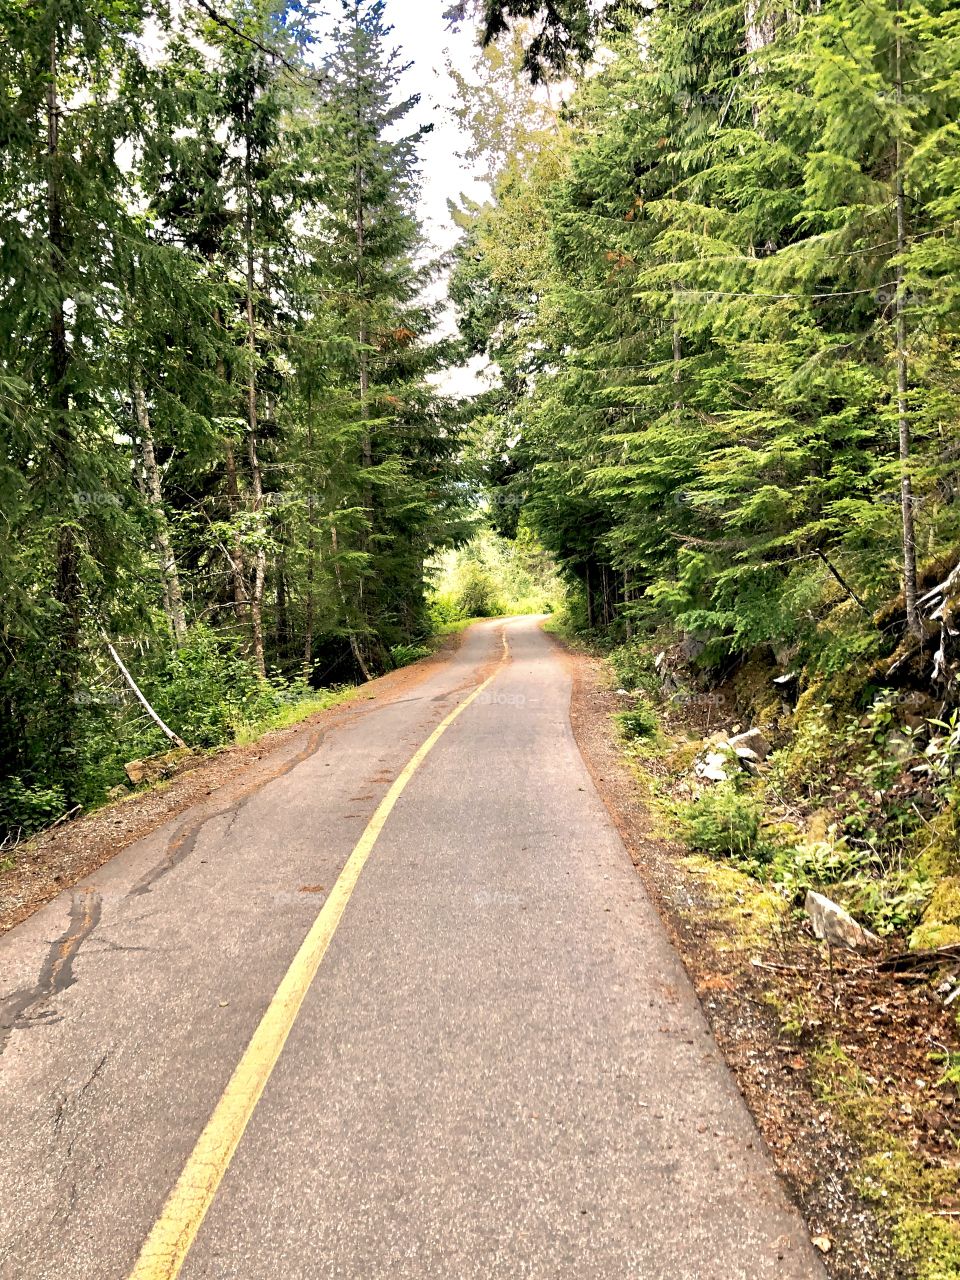 A cycling path through a lush evergreen forest 